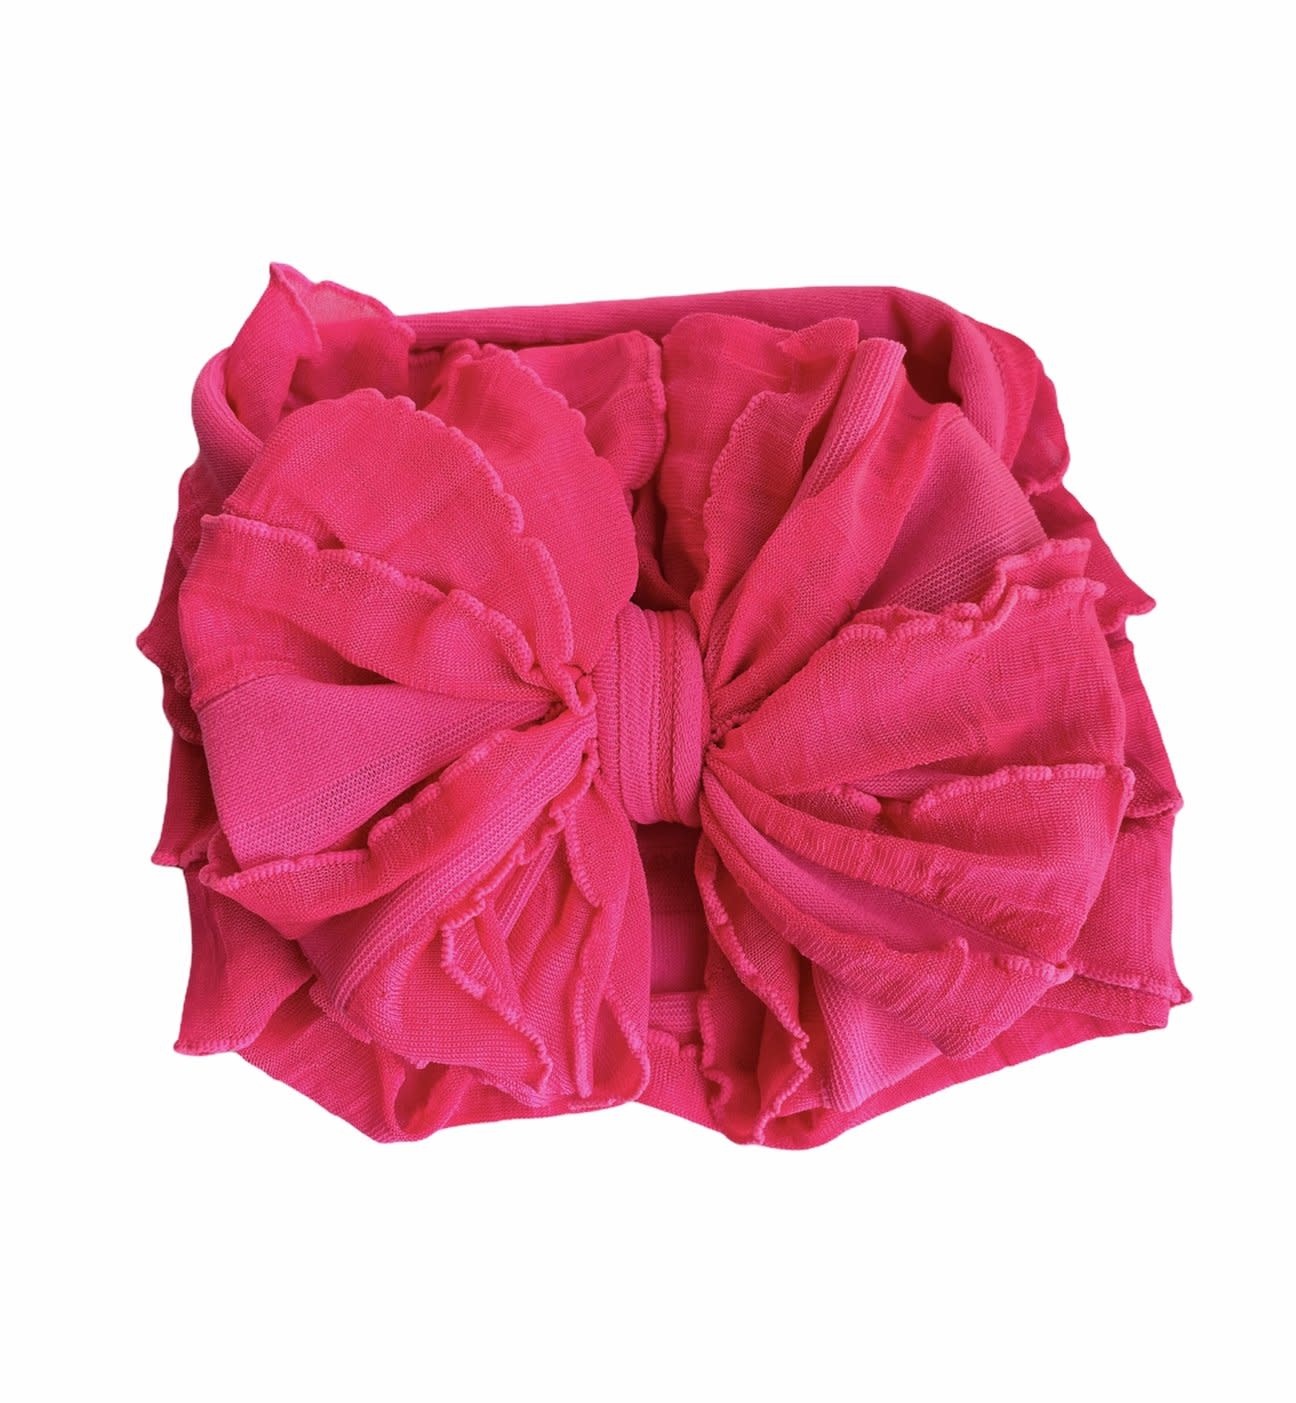 In Awe Couture Ruffle Headband Neon Pink